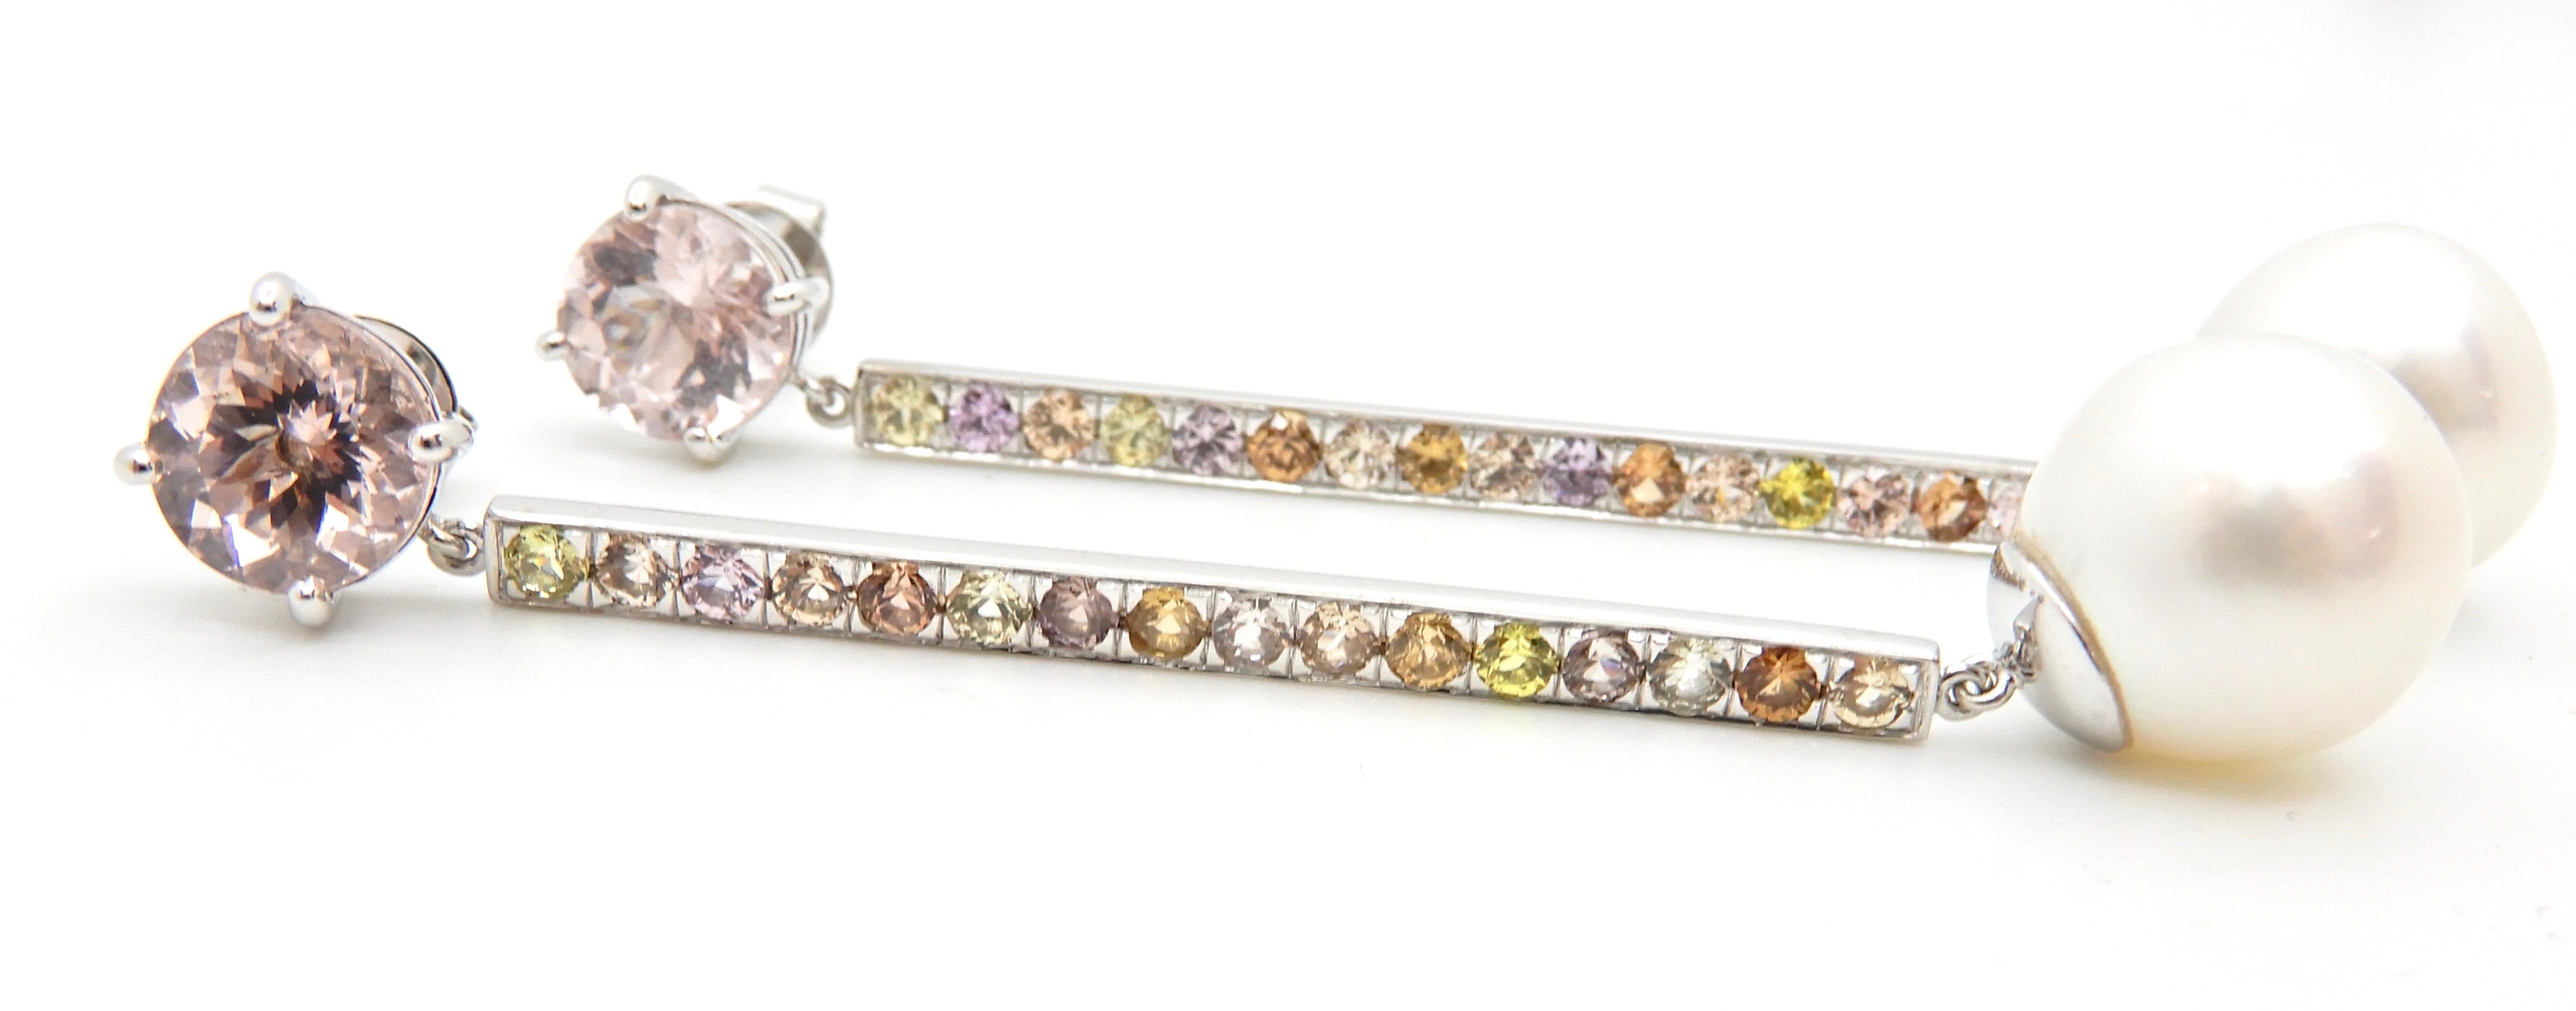 Morganite, Sapphire, Freshwater Pearl and 18 Carat Gold Handmade Drop Earrings For Sale 1